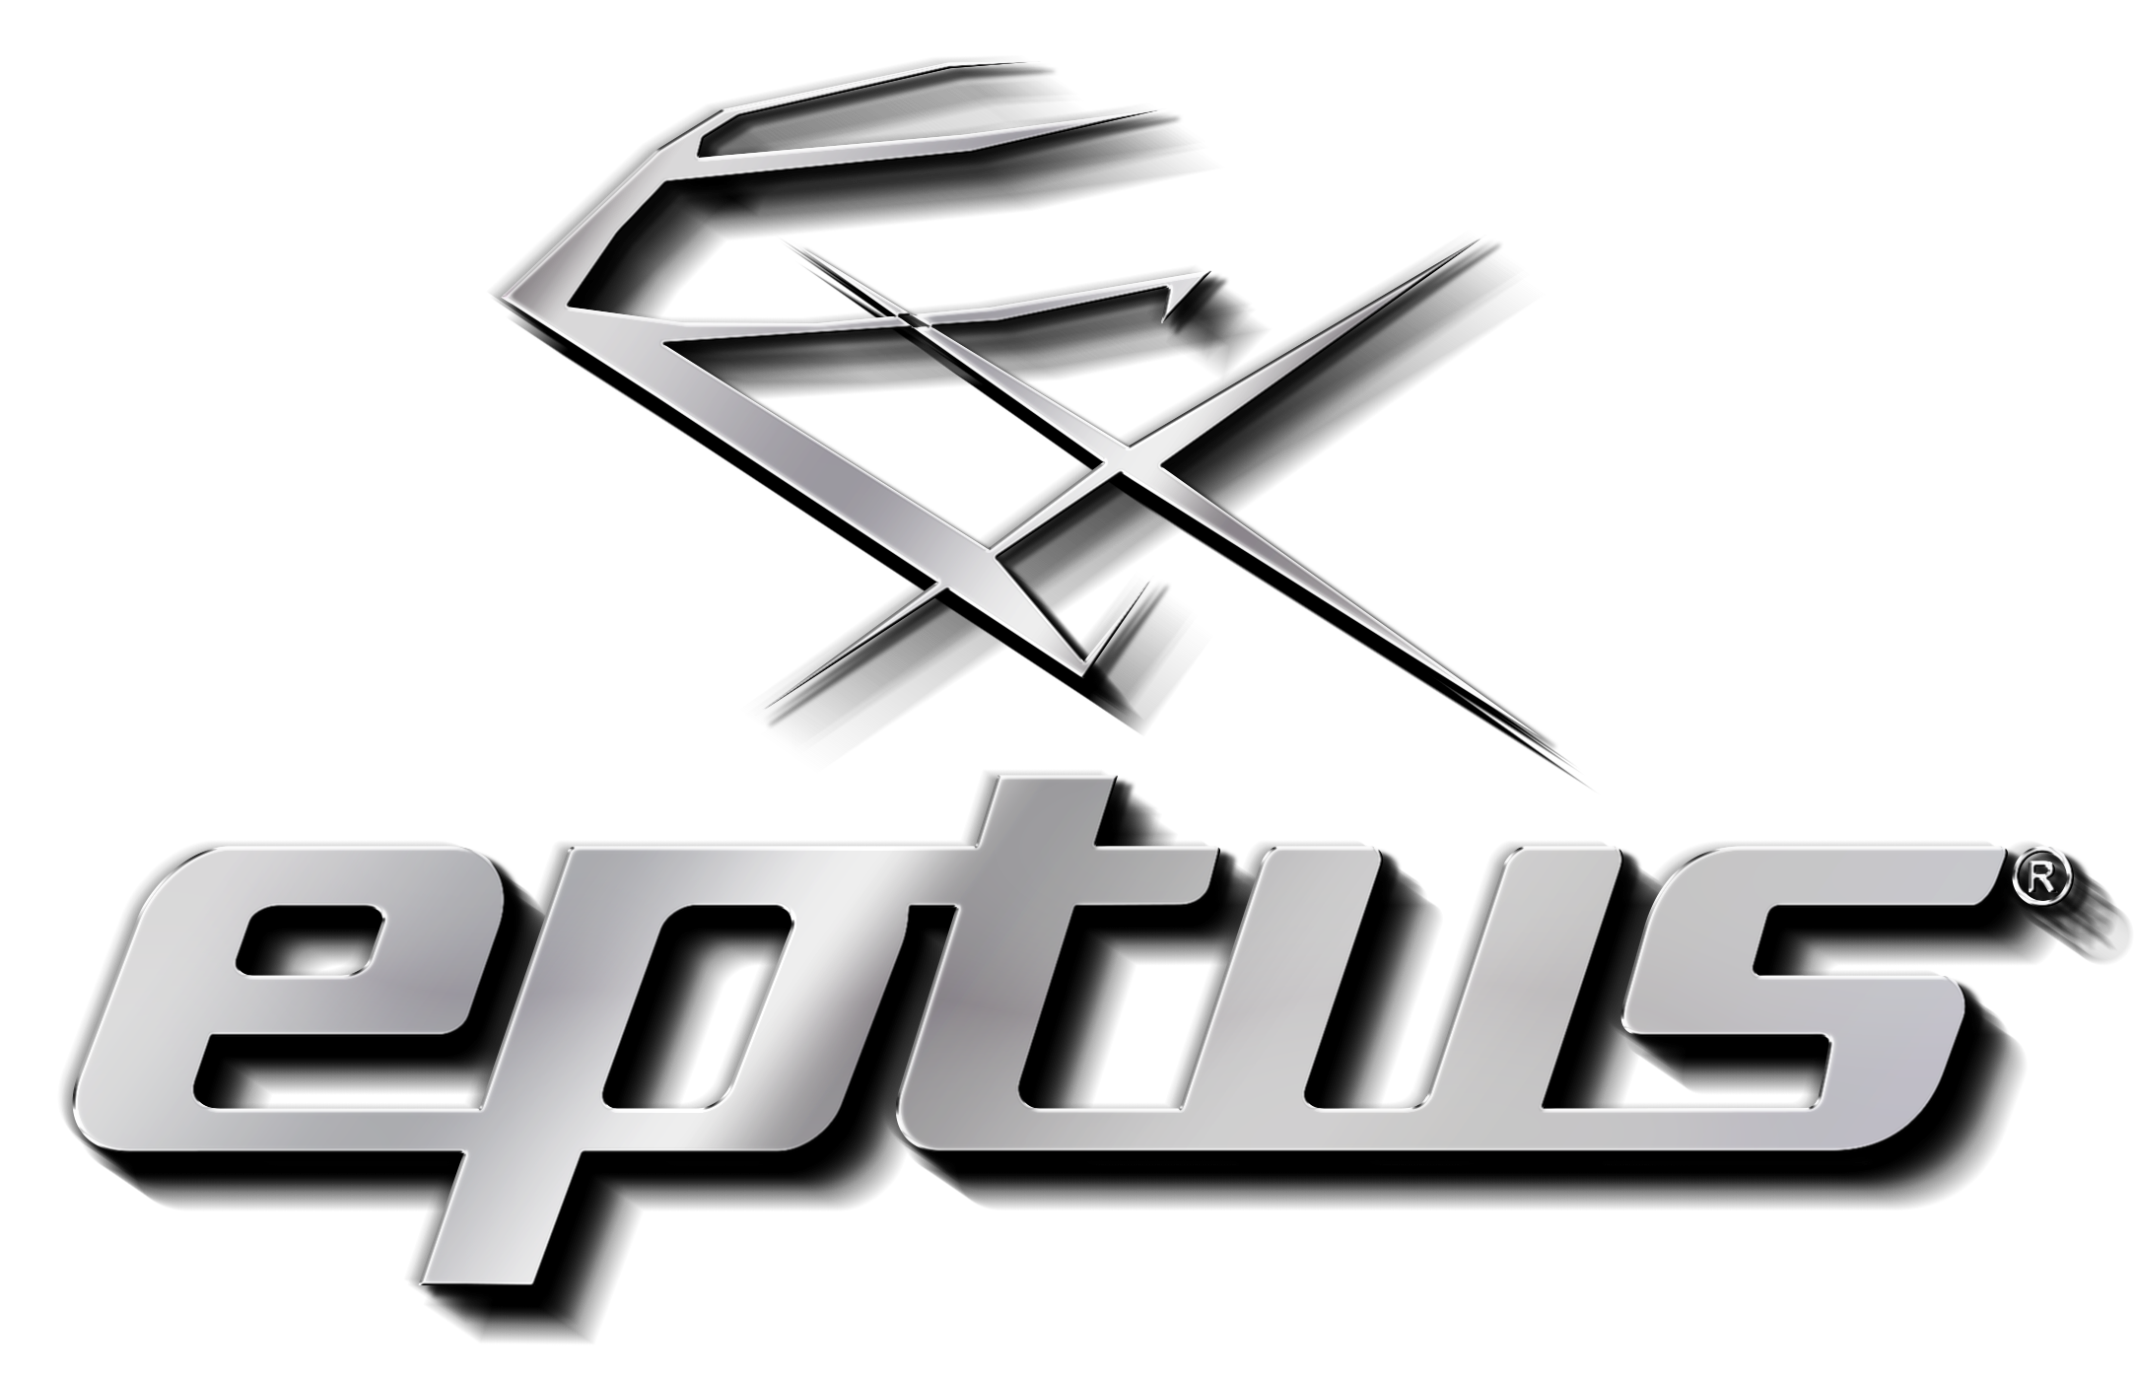 Eptus logo